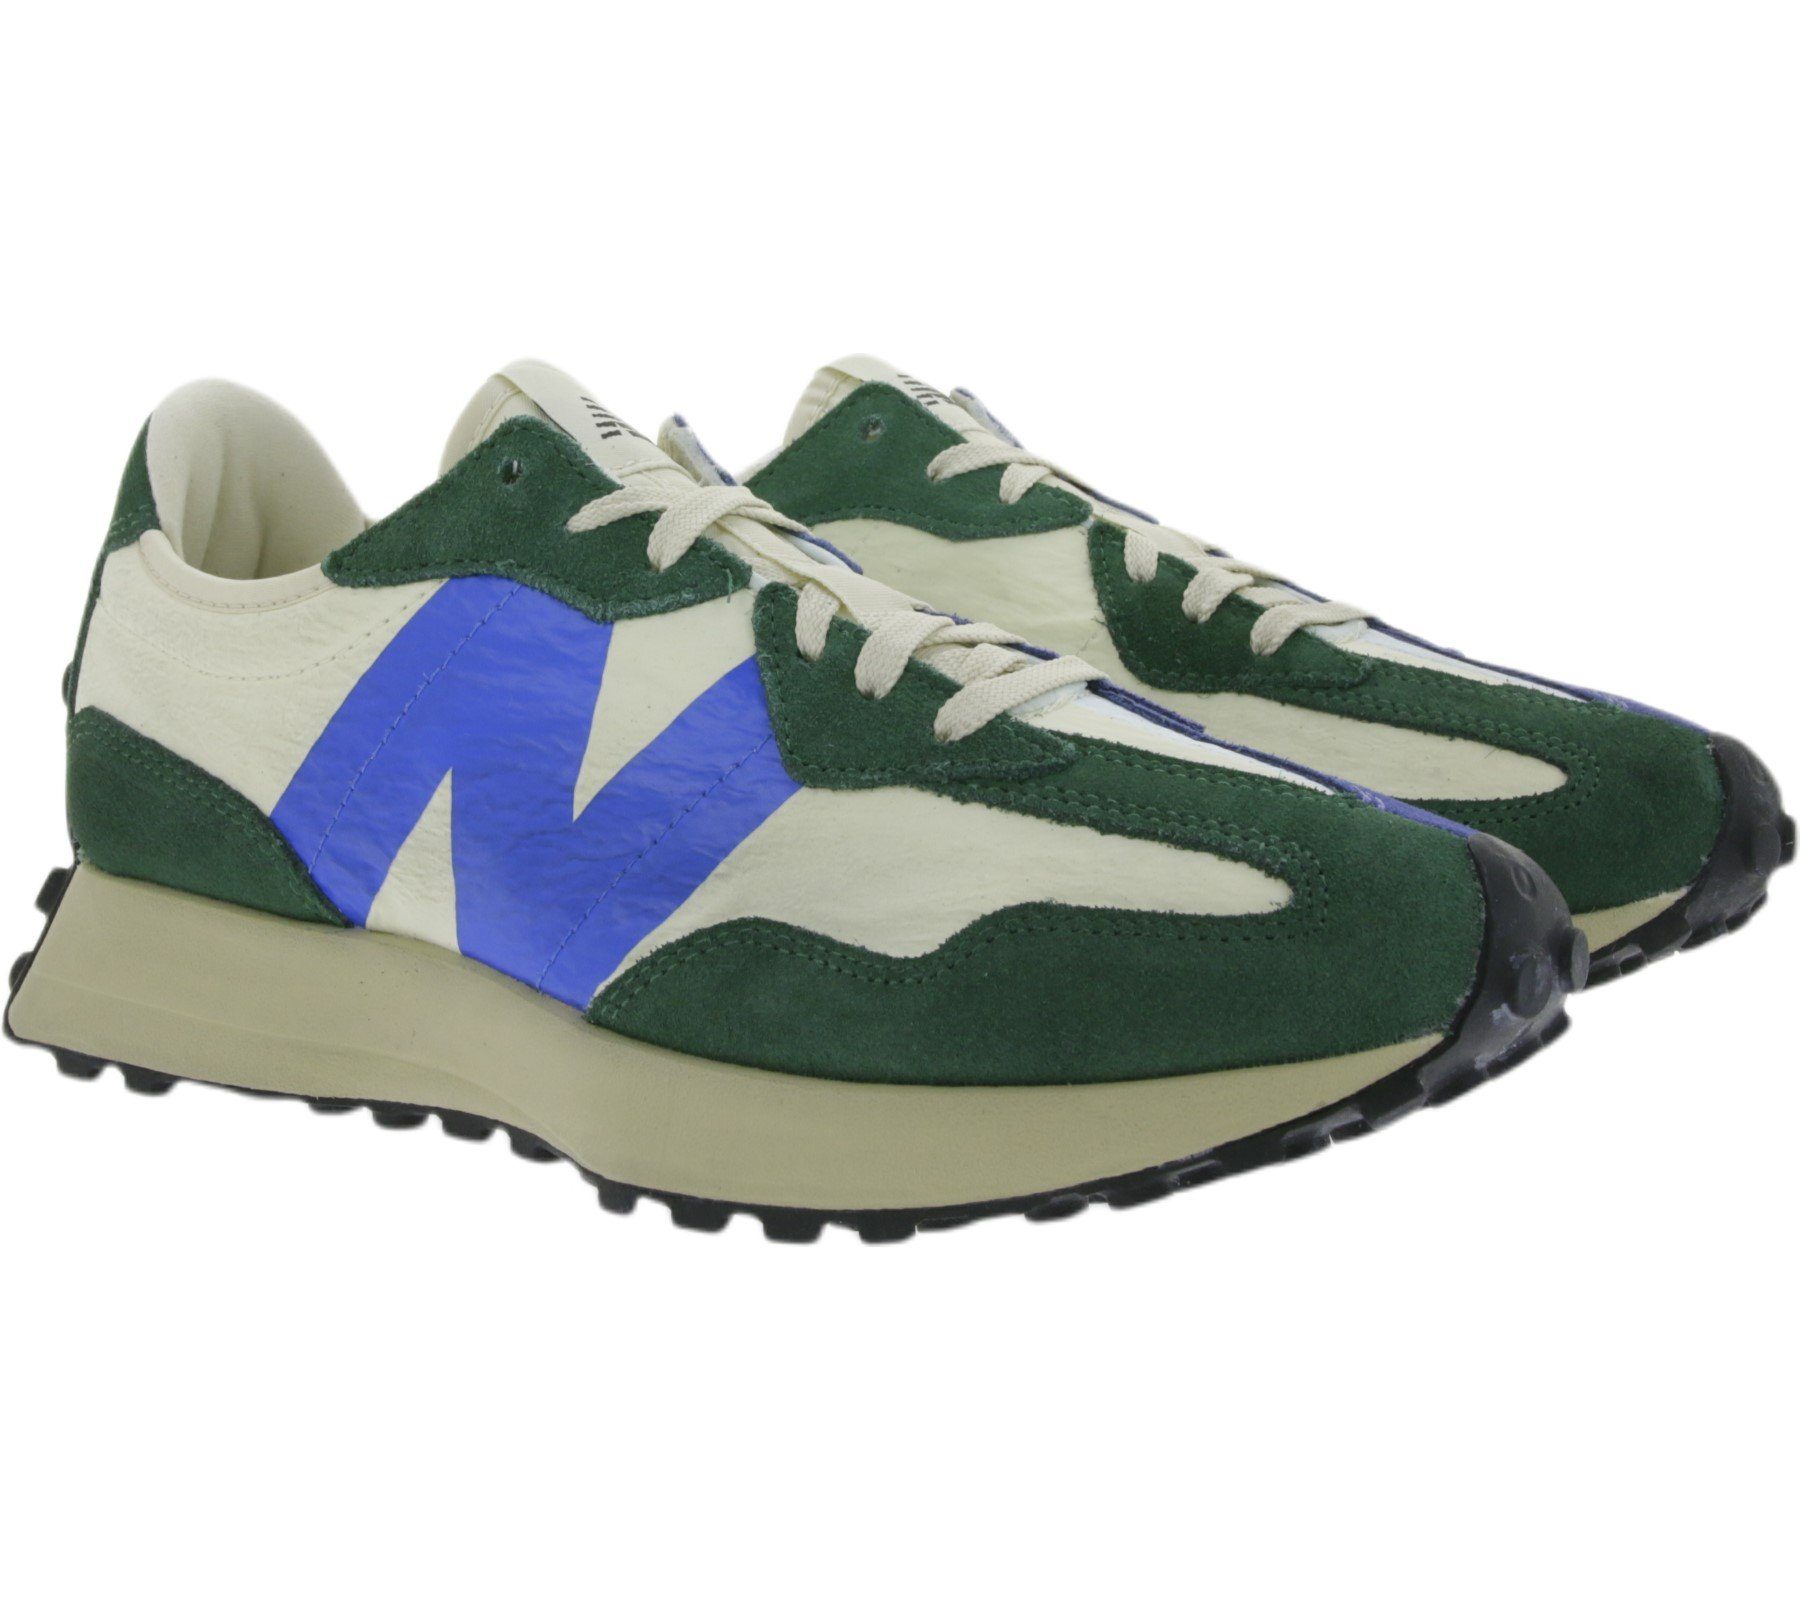 New Balance »New Balance Herren Lifestyle-Schuhe coole 70s-Sneaker MS327  Turnschuhe Mehrfarbig« Sneaker online kaufen | OTTO